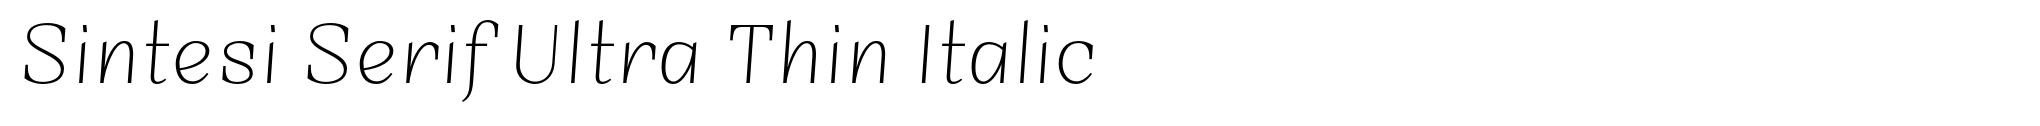 Sintesi Serif Ultra Thin Italic image